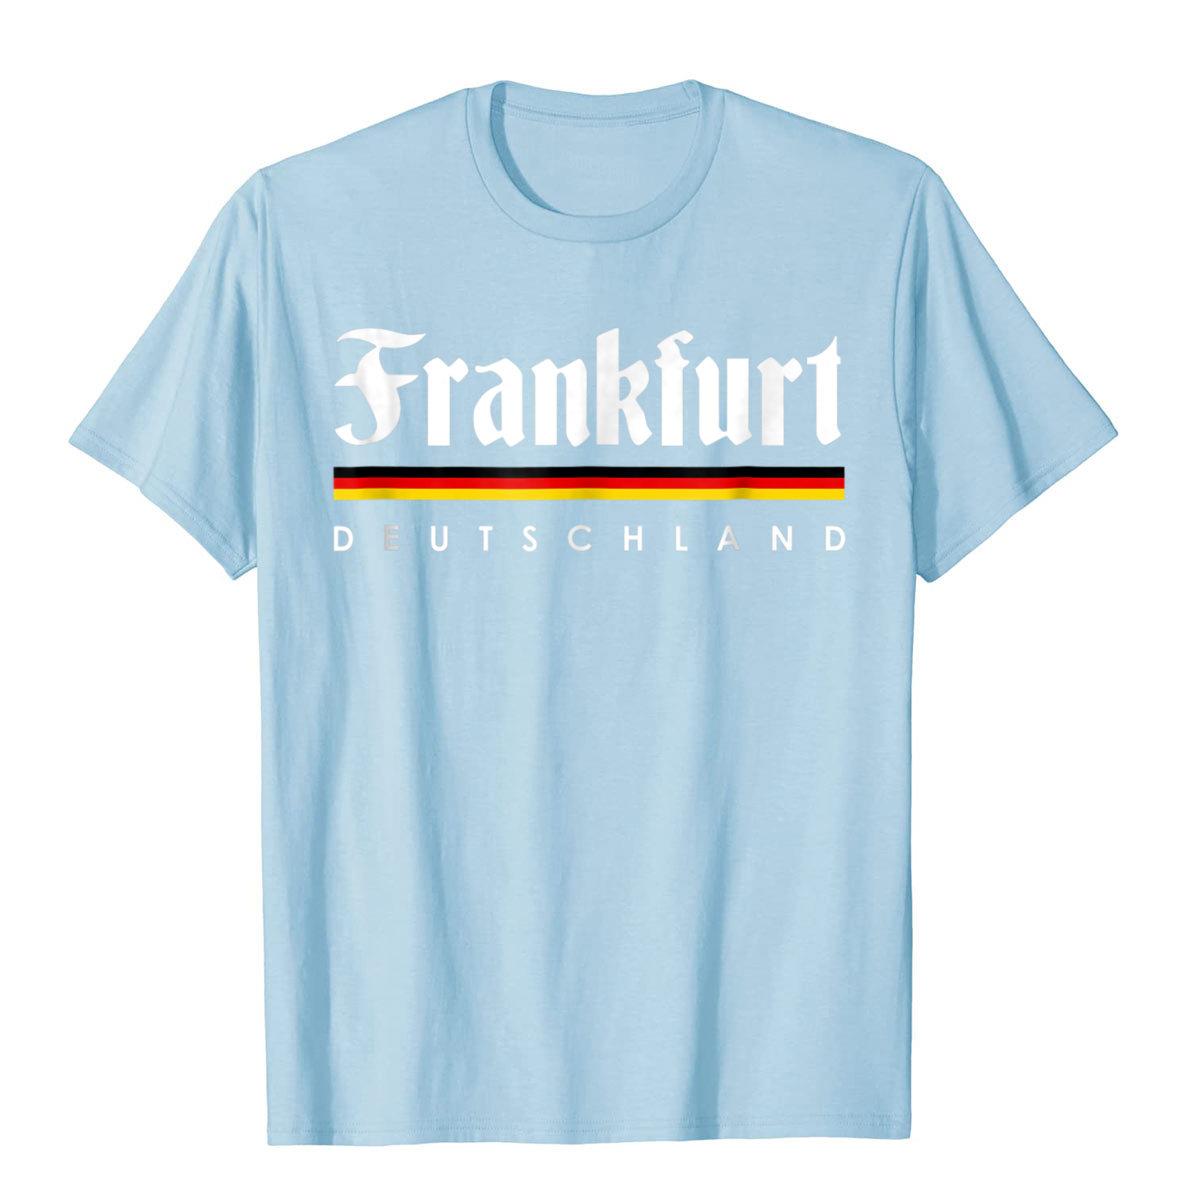 Frankfurt Germany Shirt Funny Shirt Souvenir Gift